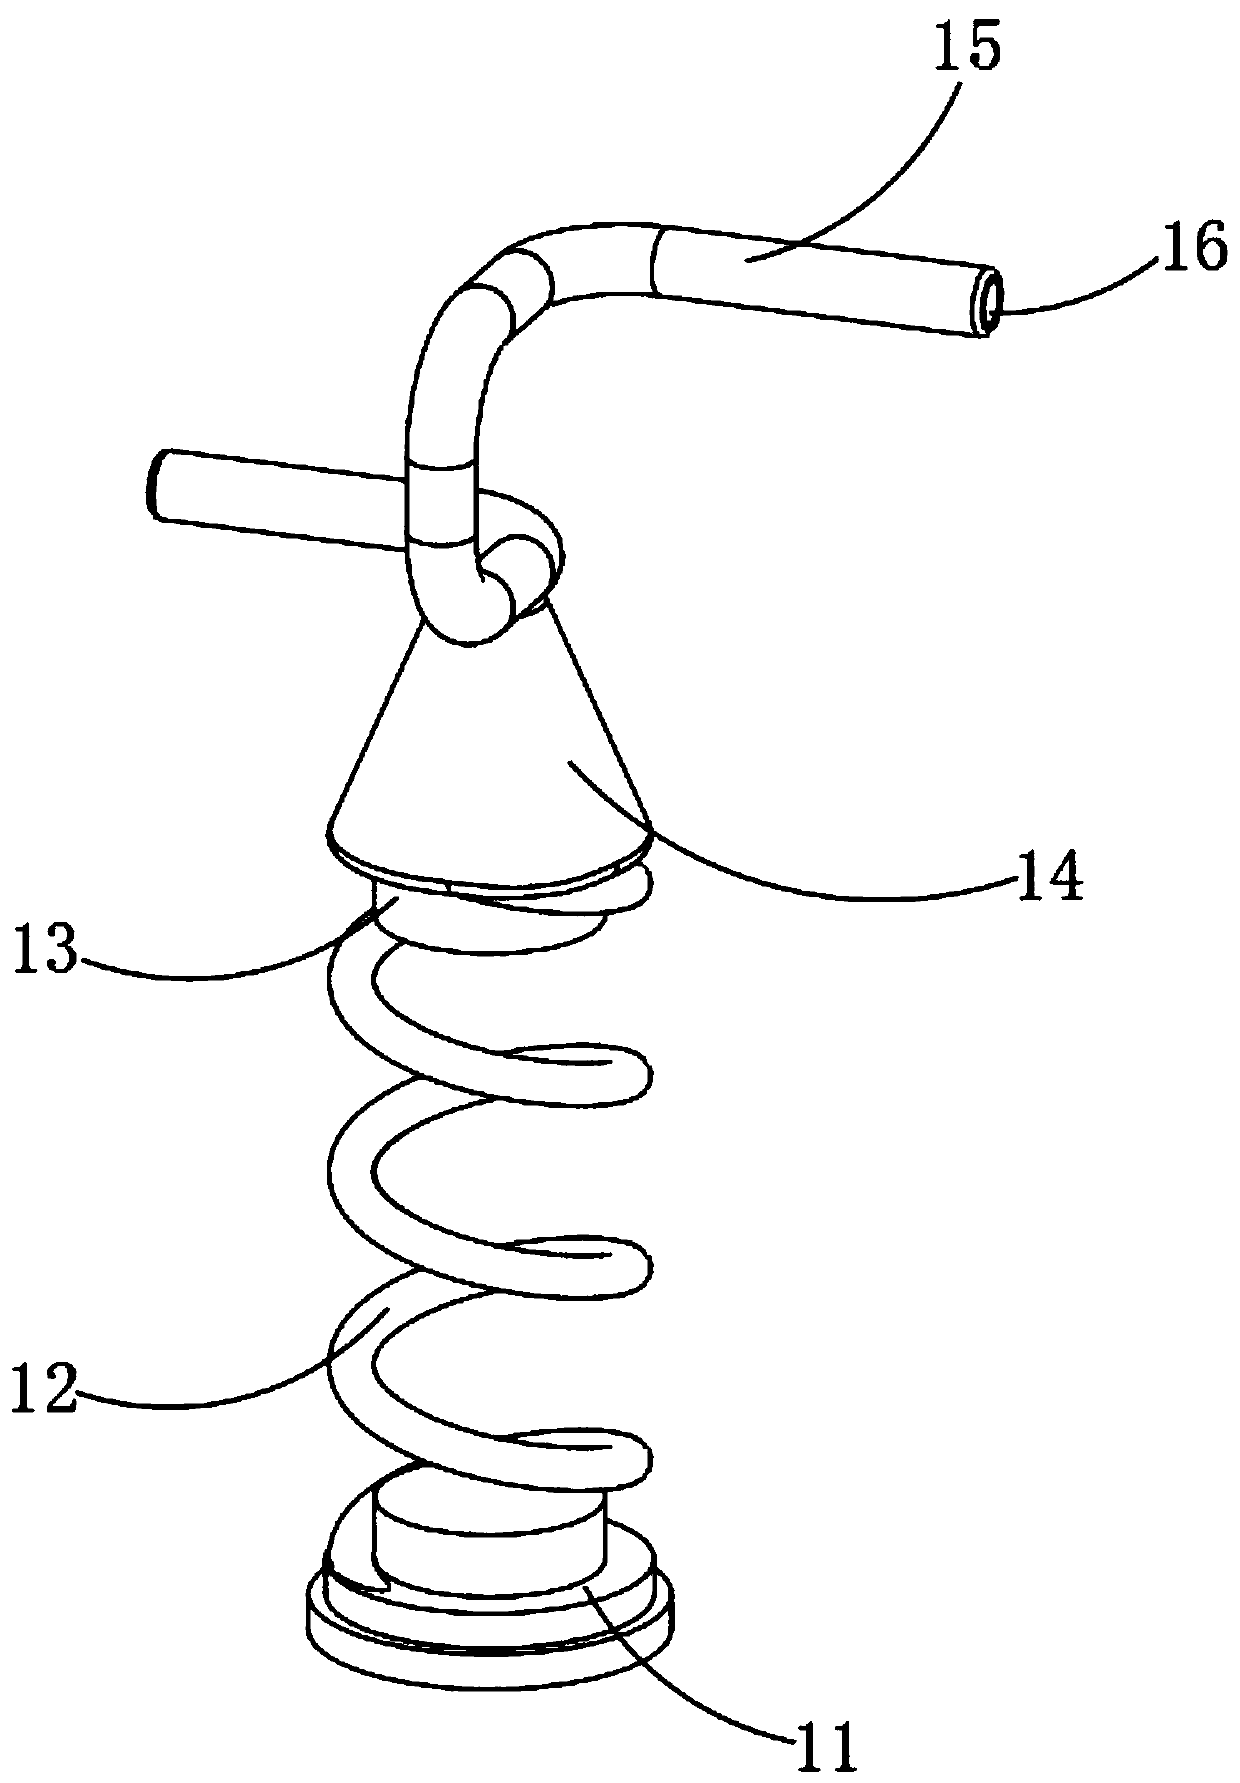 Chemical fiber yarn tension buffer device capable of preventing yarn breakage